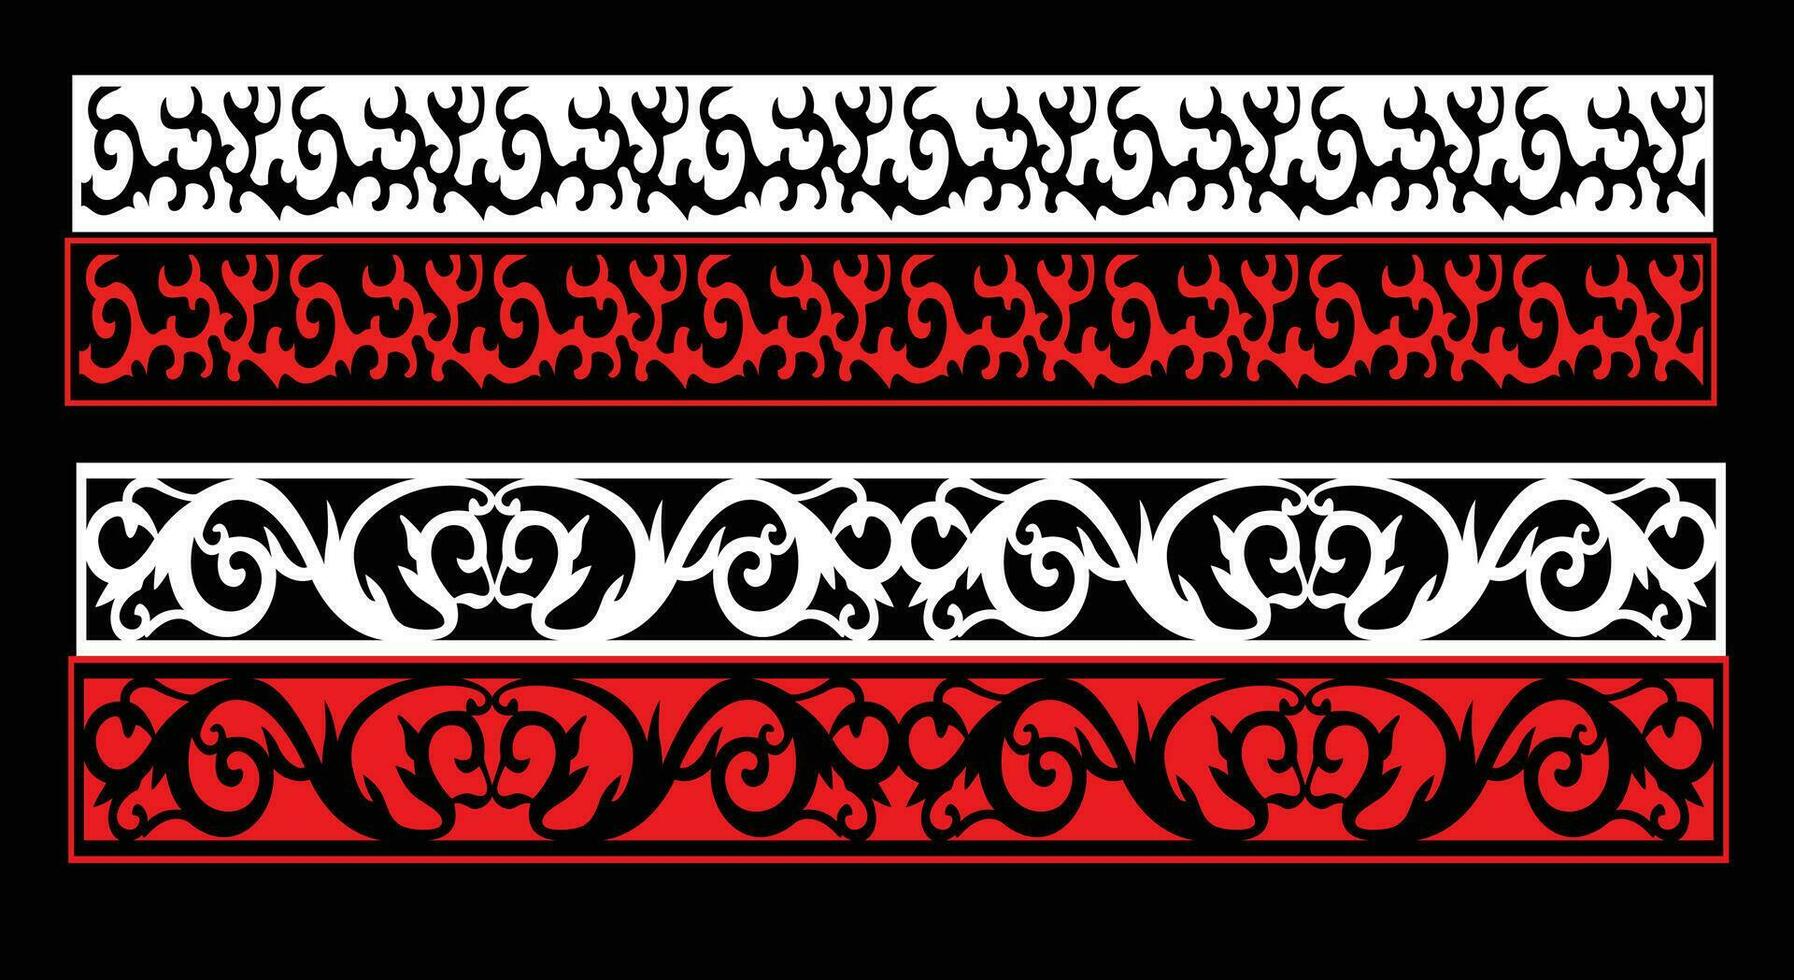 Decorative wall panels set Jali design CNC pattern, laser cutting pattern, router CNCcutting.Jali Laser cut decorative panel set with lace pattern vector